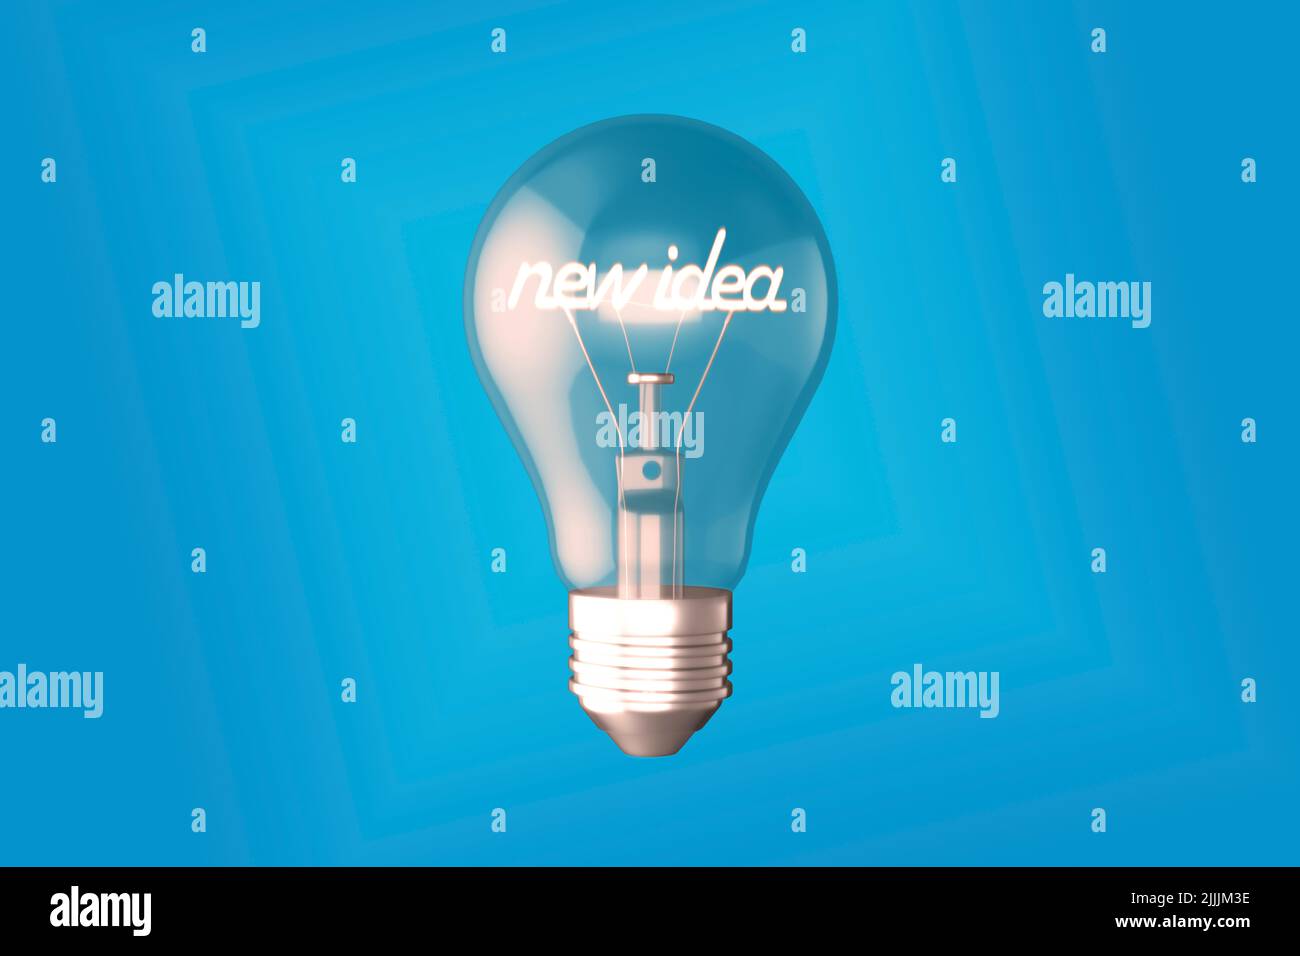 lightbulb light bulb idea concept inspiration new idea concept Stock Photo